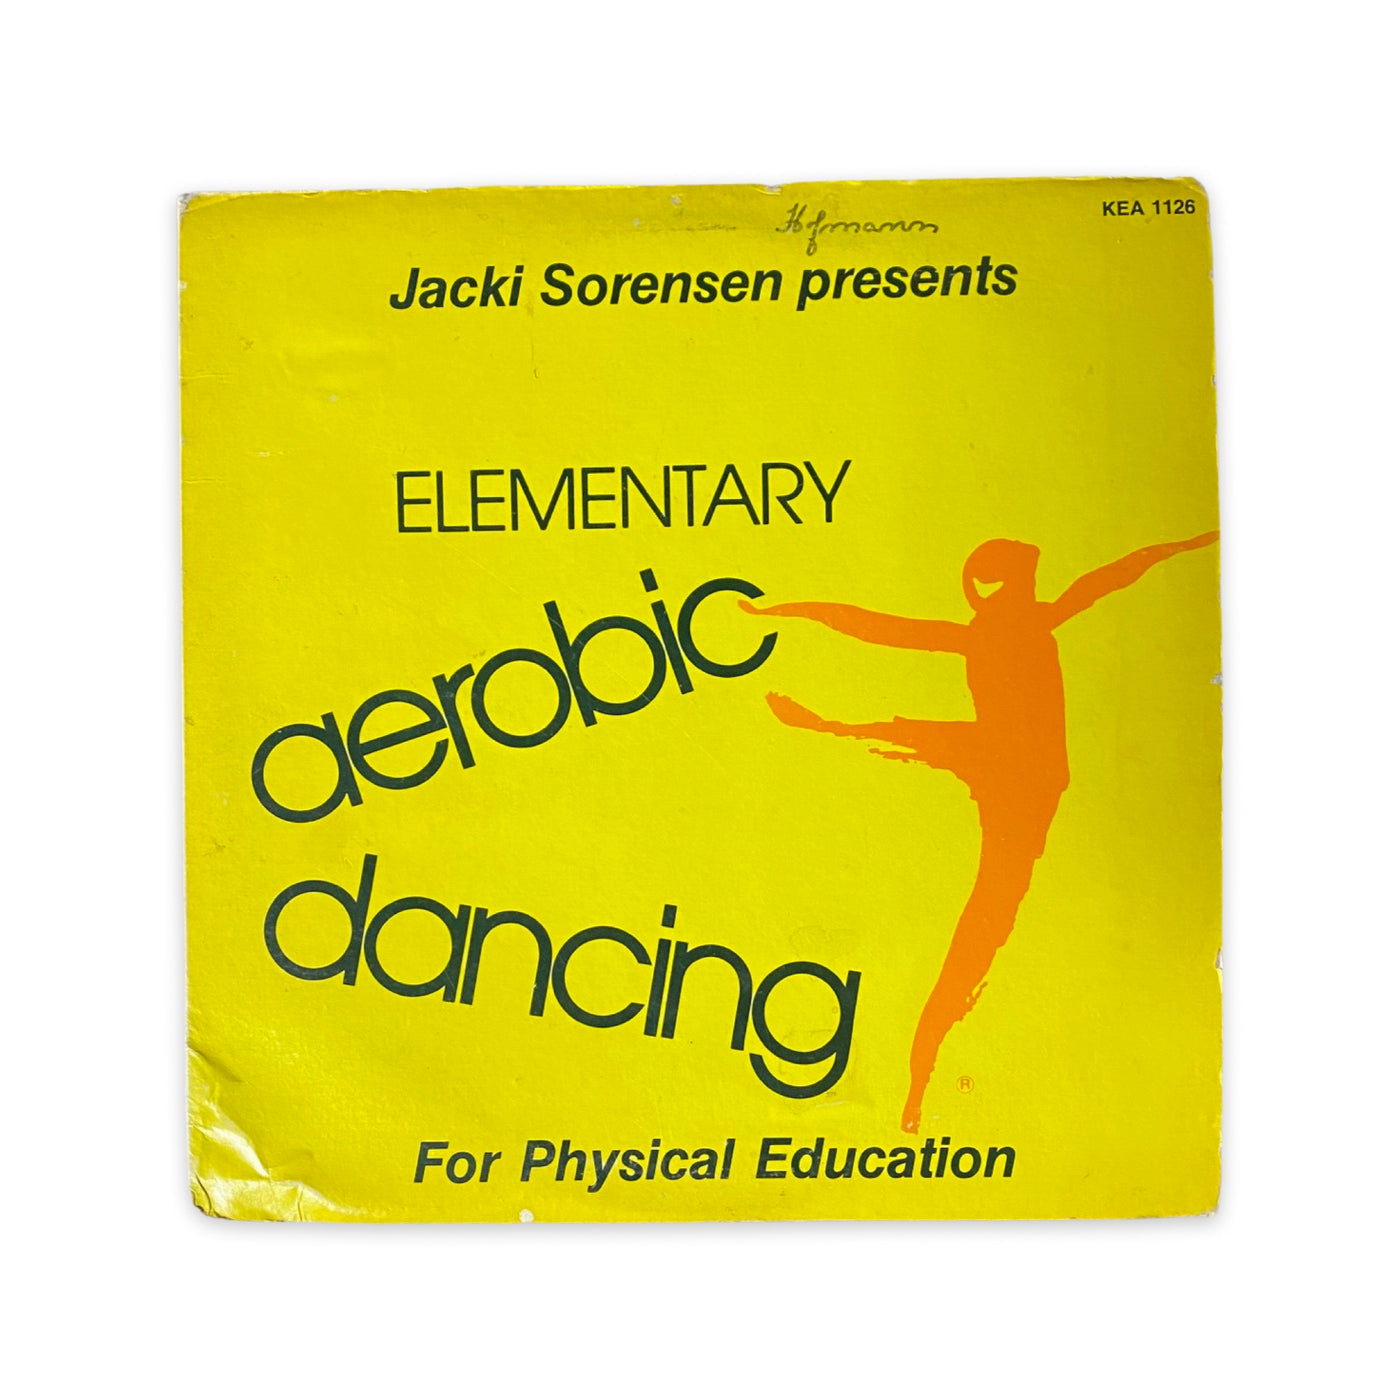 Jacki Sorensen - Elementary Aerobic Dancing For Physical Education